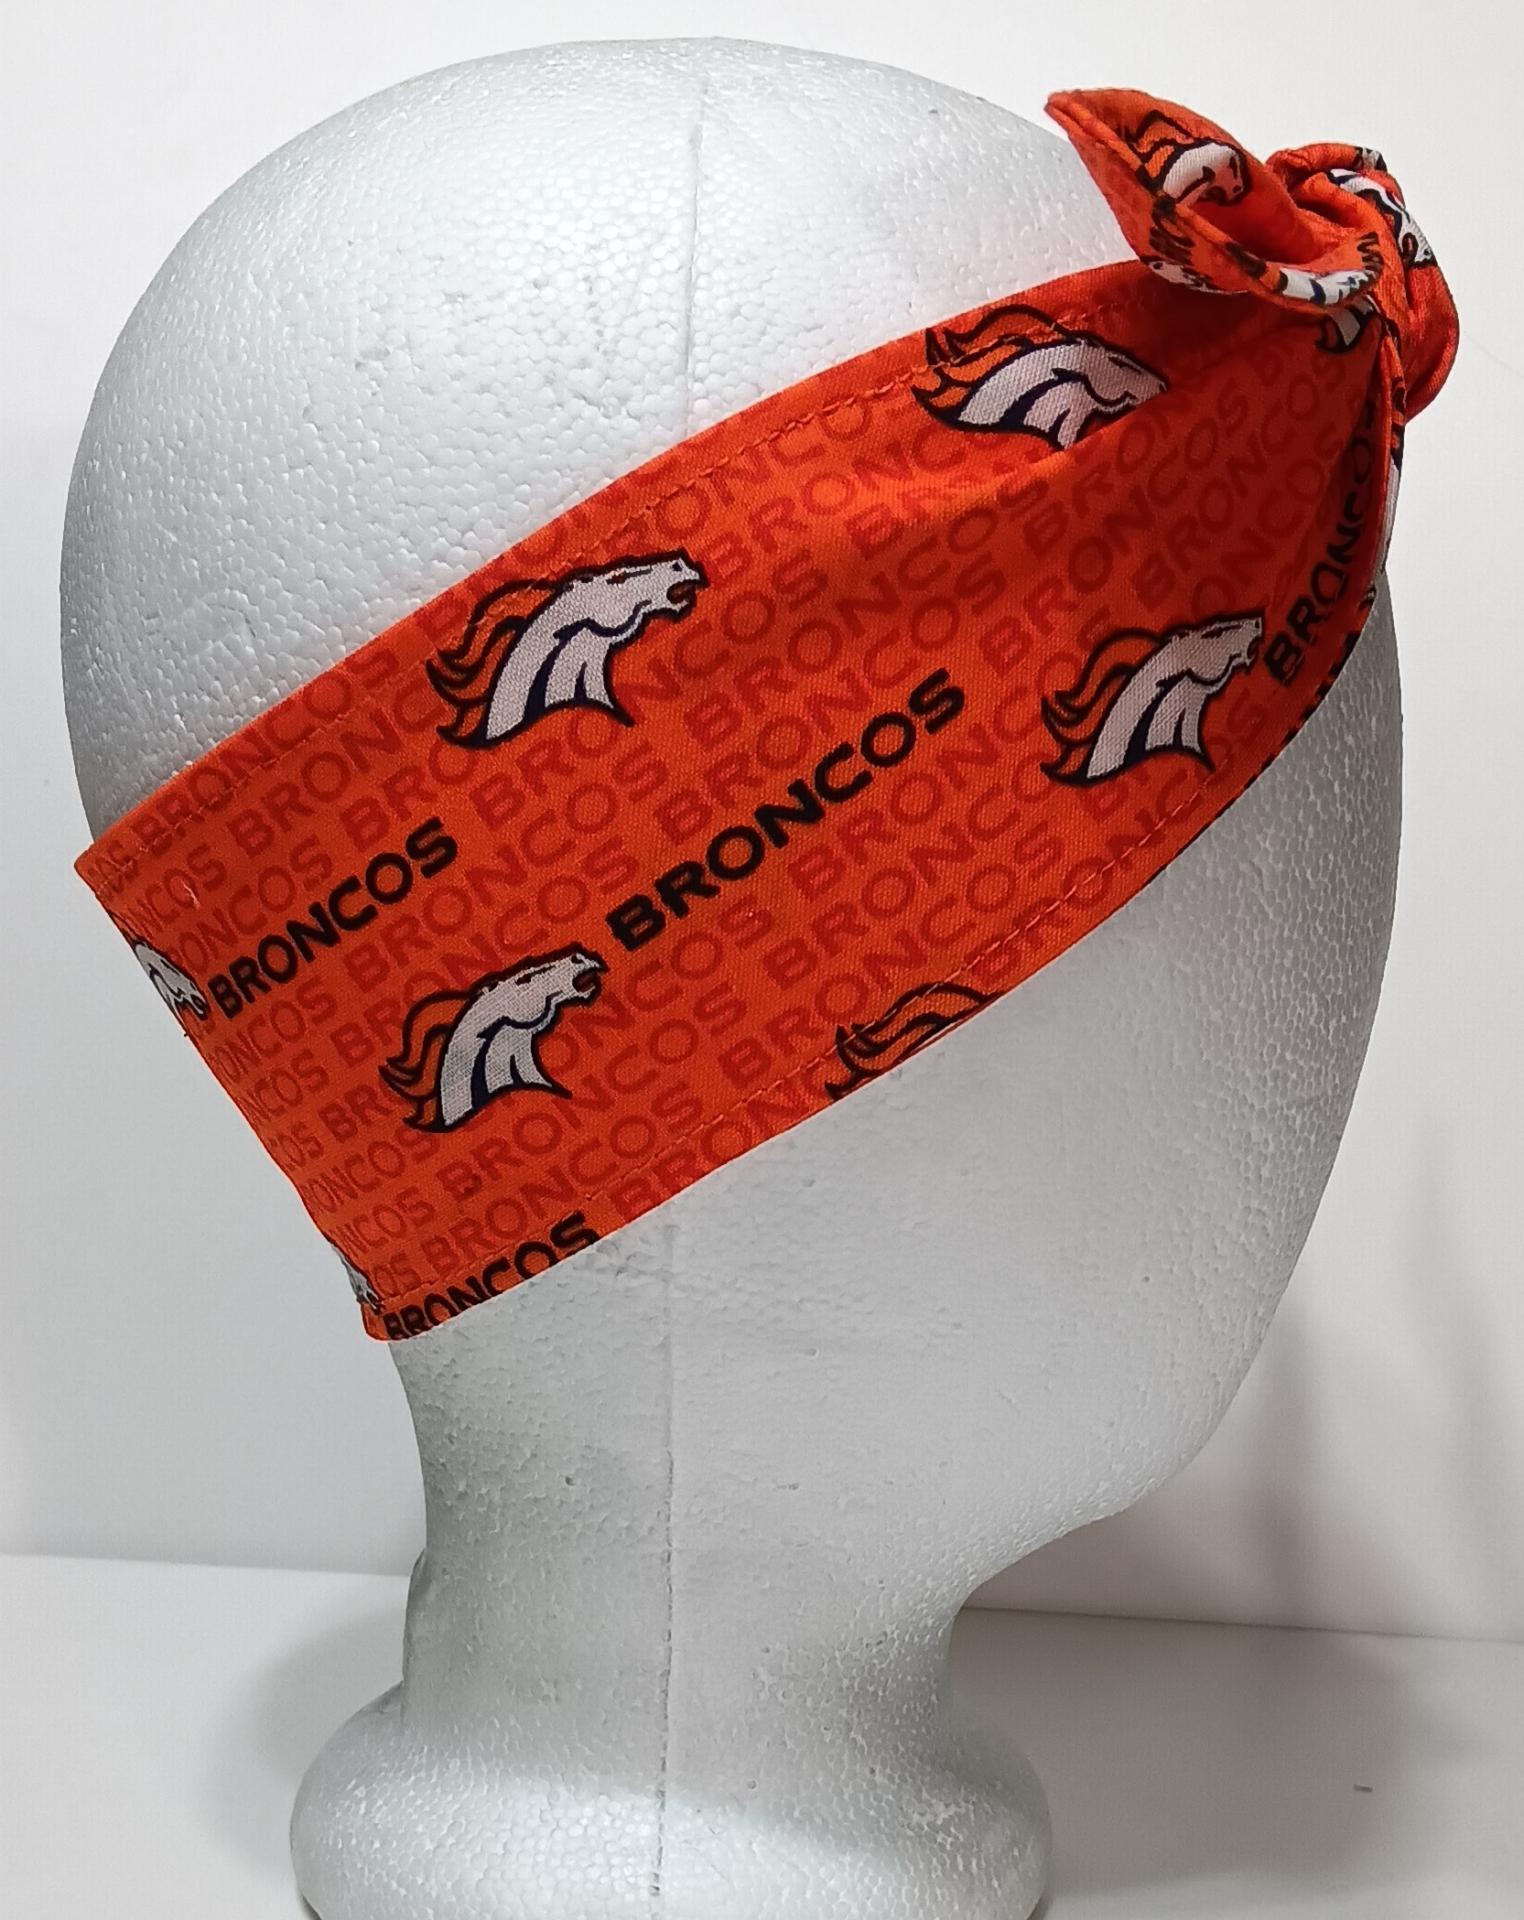 3” wide Denver Broncos headband, self tie, orange, hair tie, hair wrap, pin up style, scarf, rockabilly style, handmade